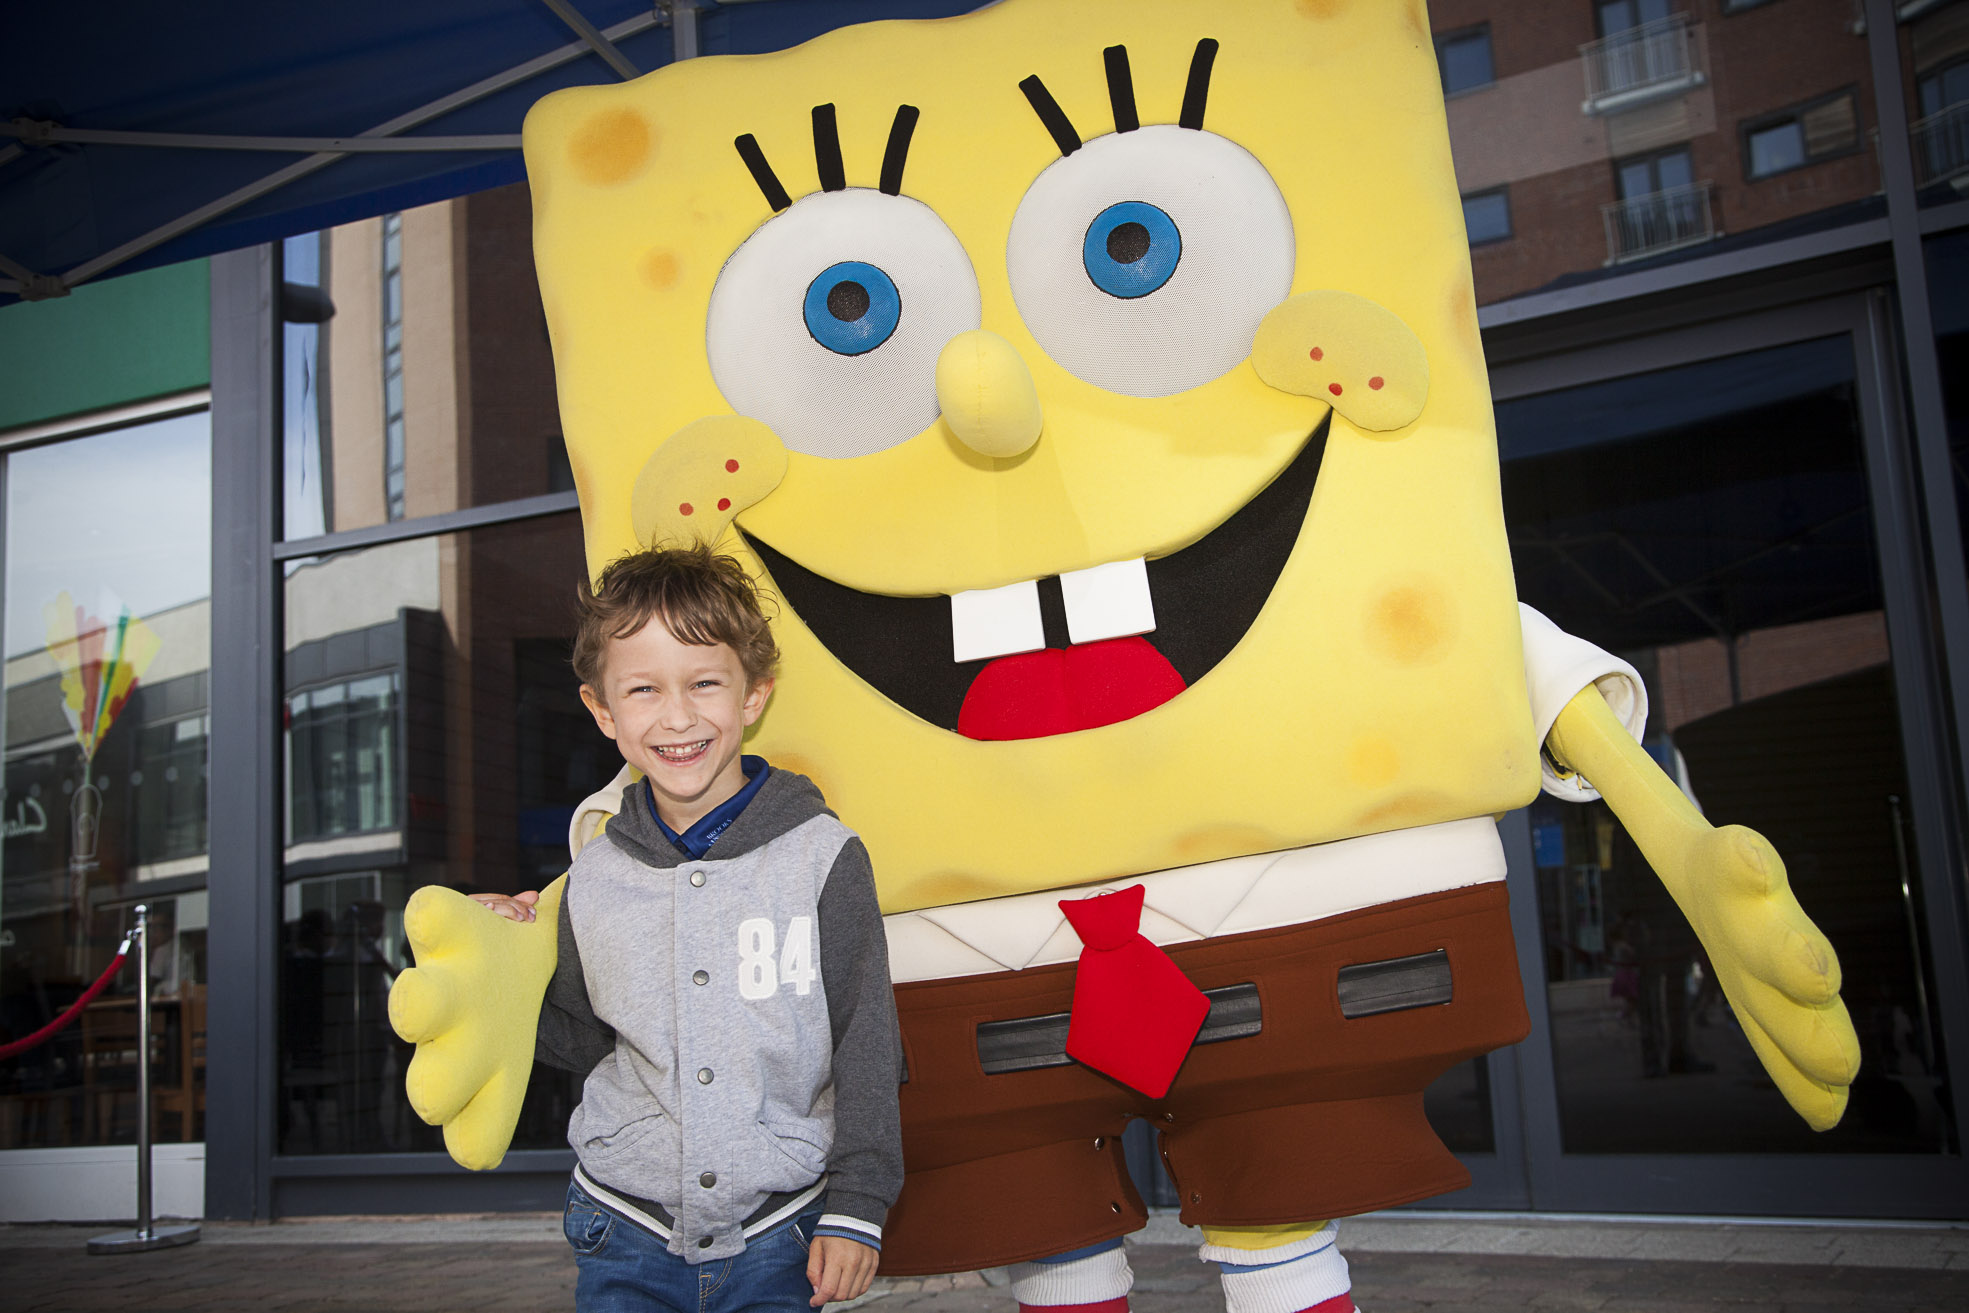 SpongeBob SquarePants makes a big splash when he meets young fans